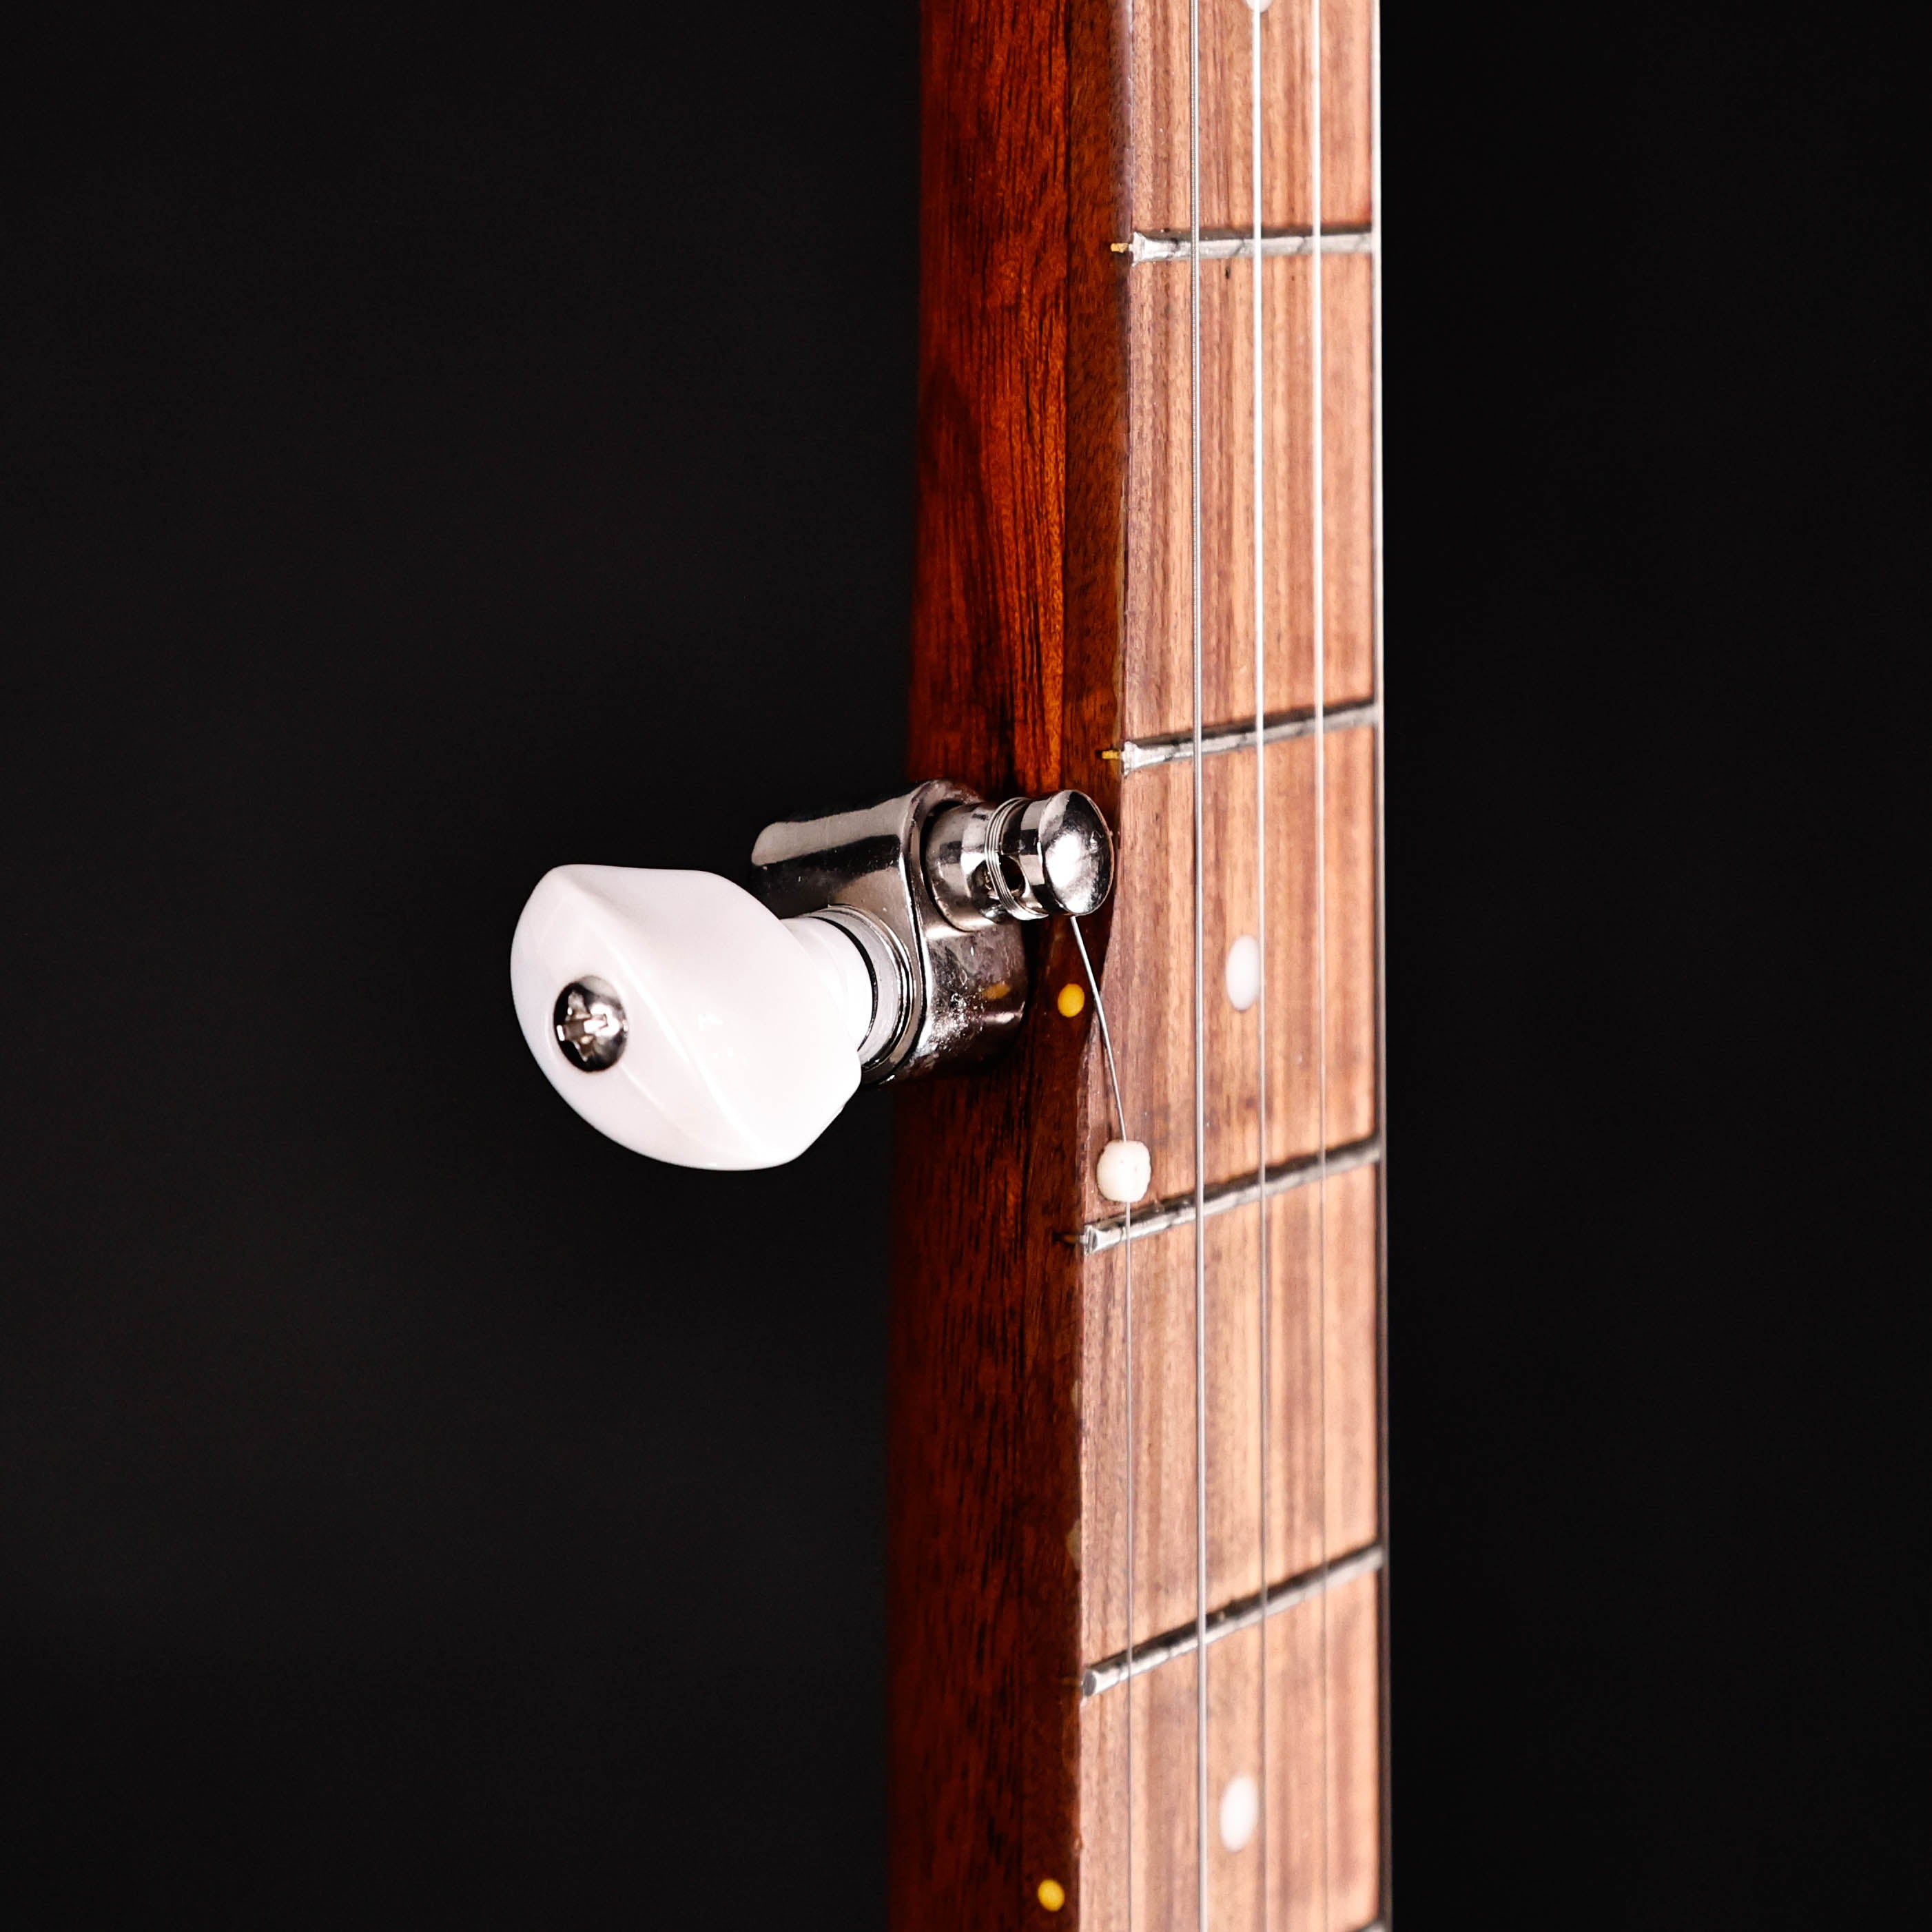 Rover RB-20 Student 5-String Openback Banjo